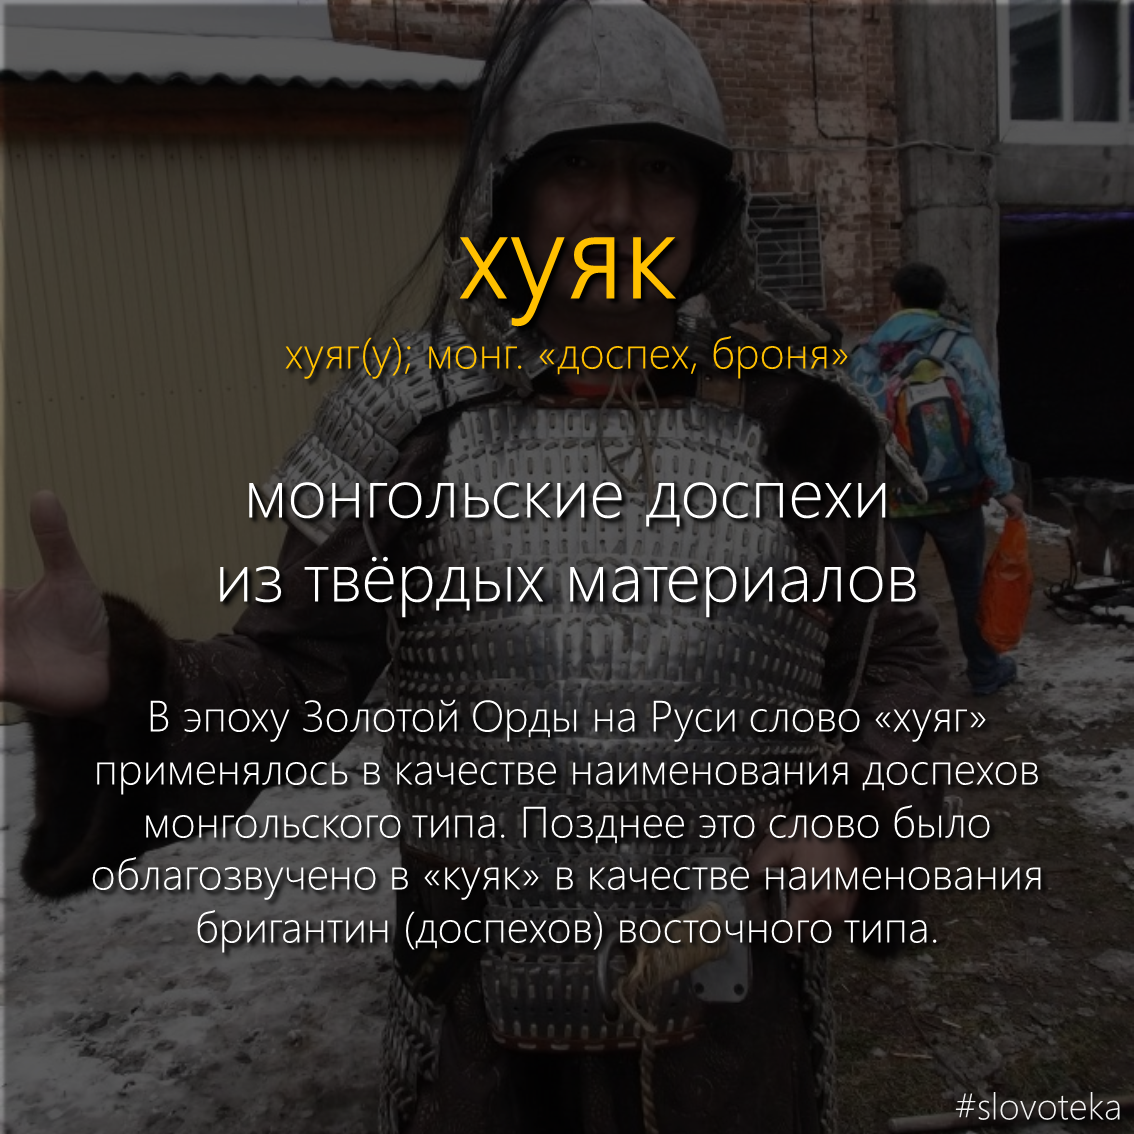 Huyak - Slovoteka, Word, The words, Dictionary, Armor, Mongolia, Mat, Longpost